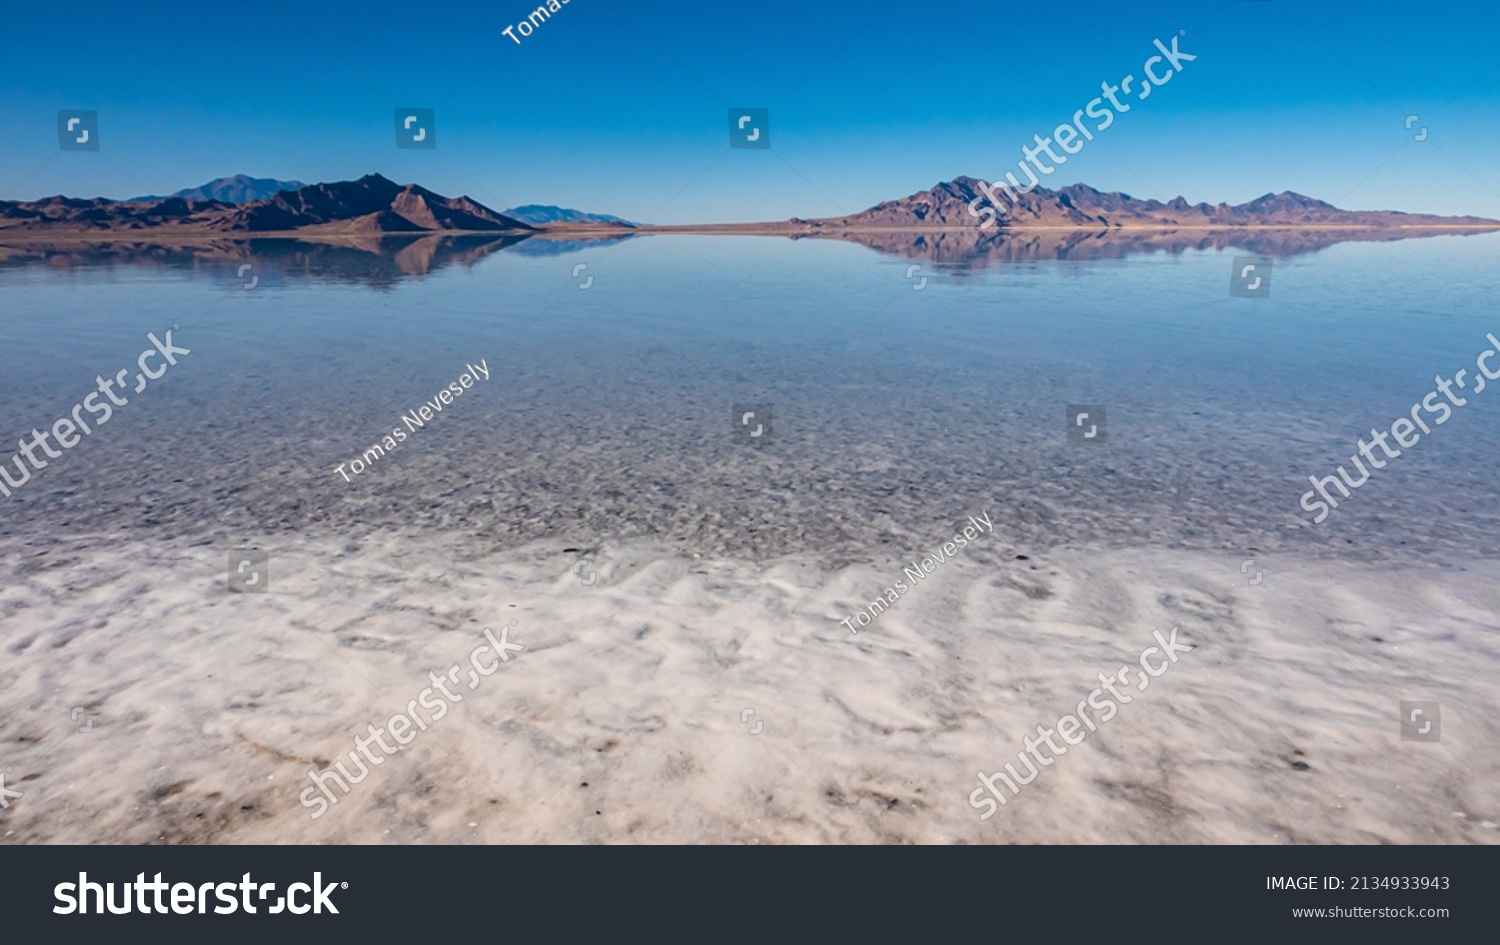 Mountains reflected in the Great Salt Lake near Slat Lake City #2134933943